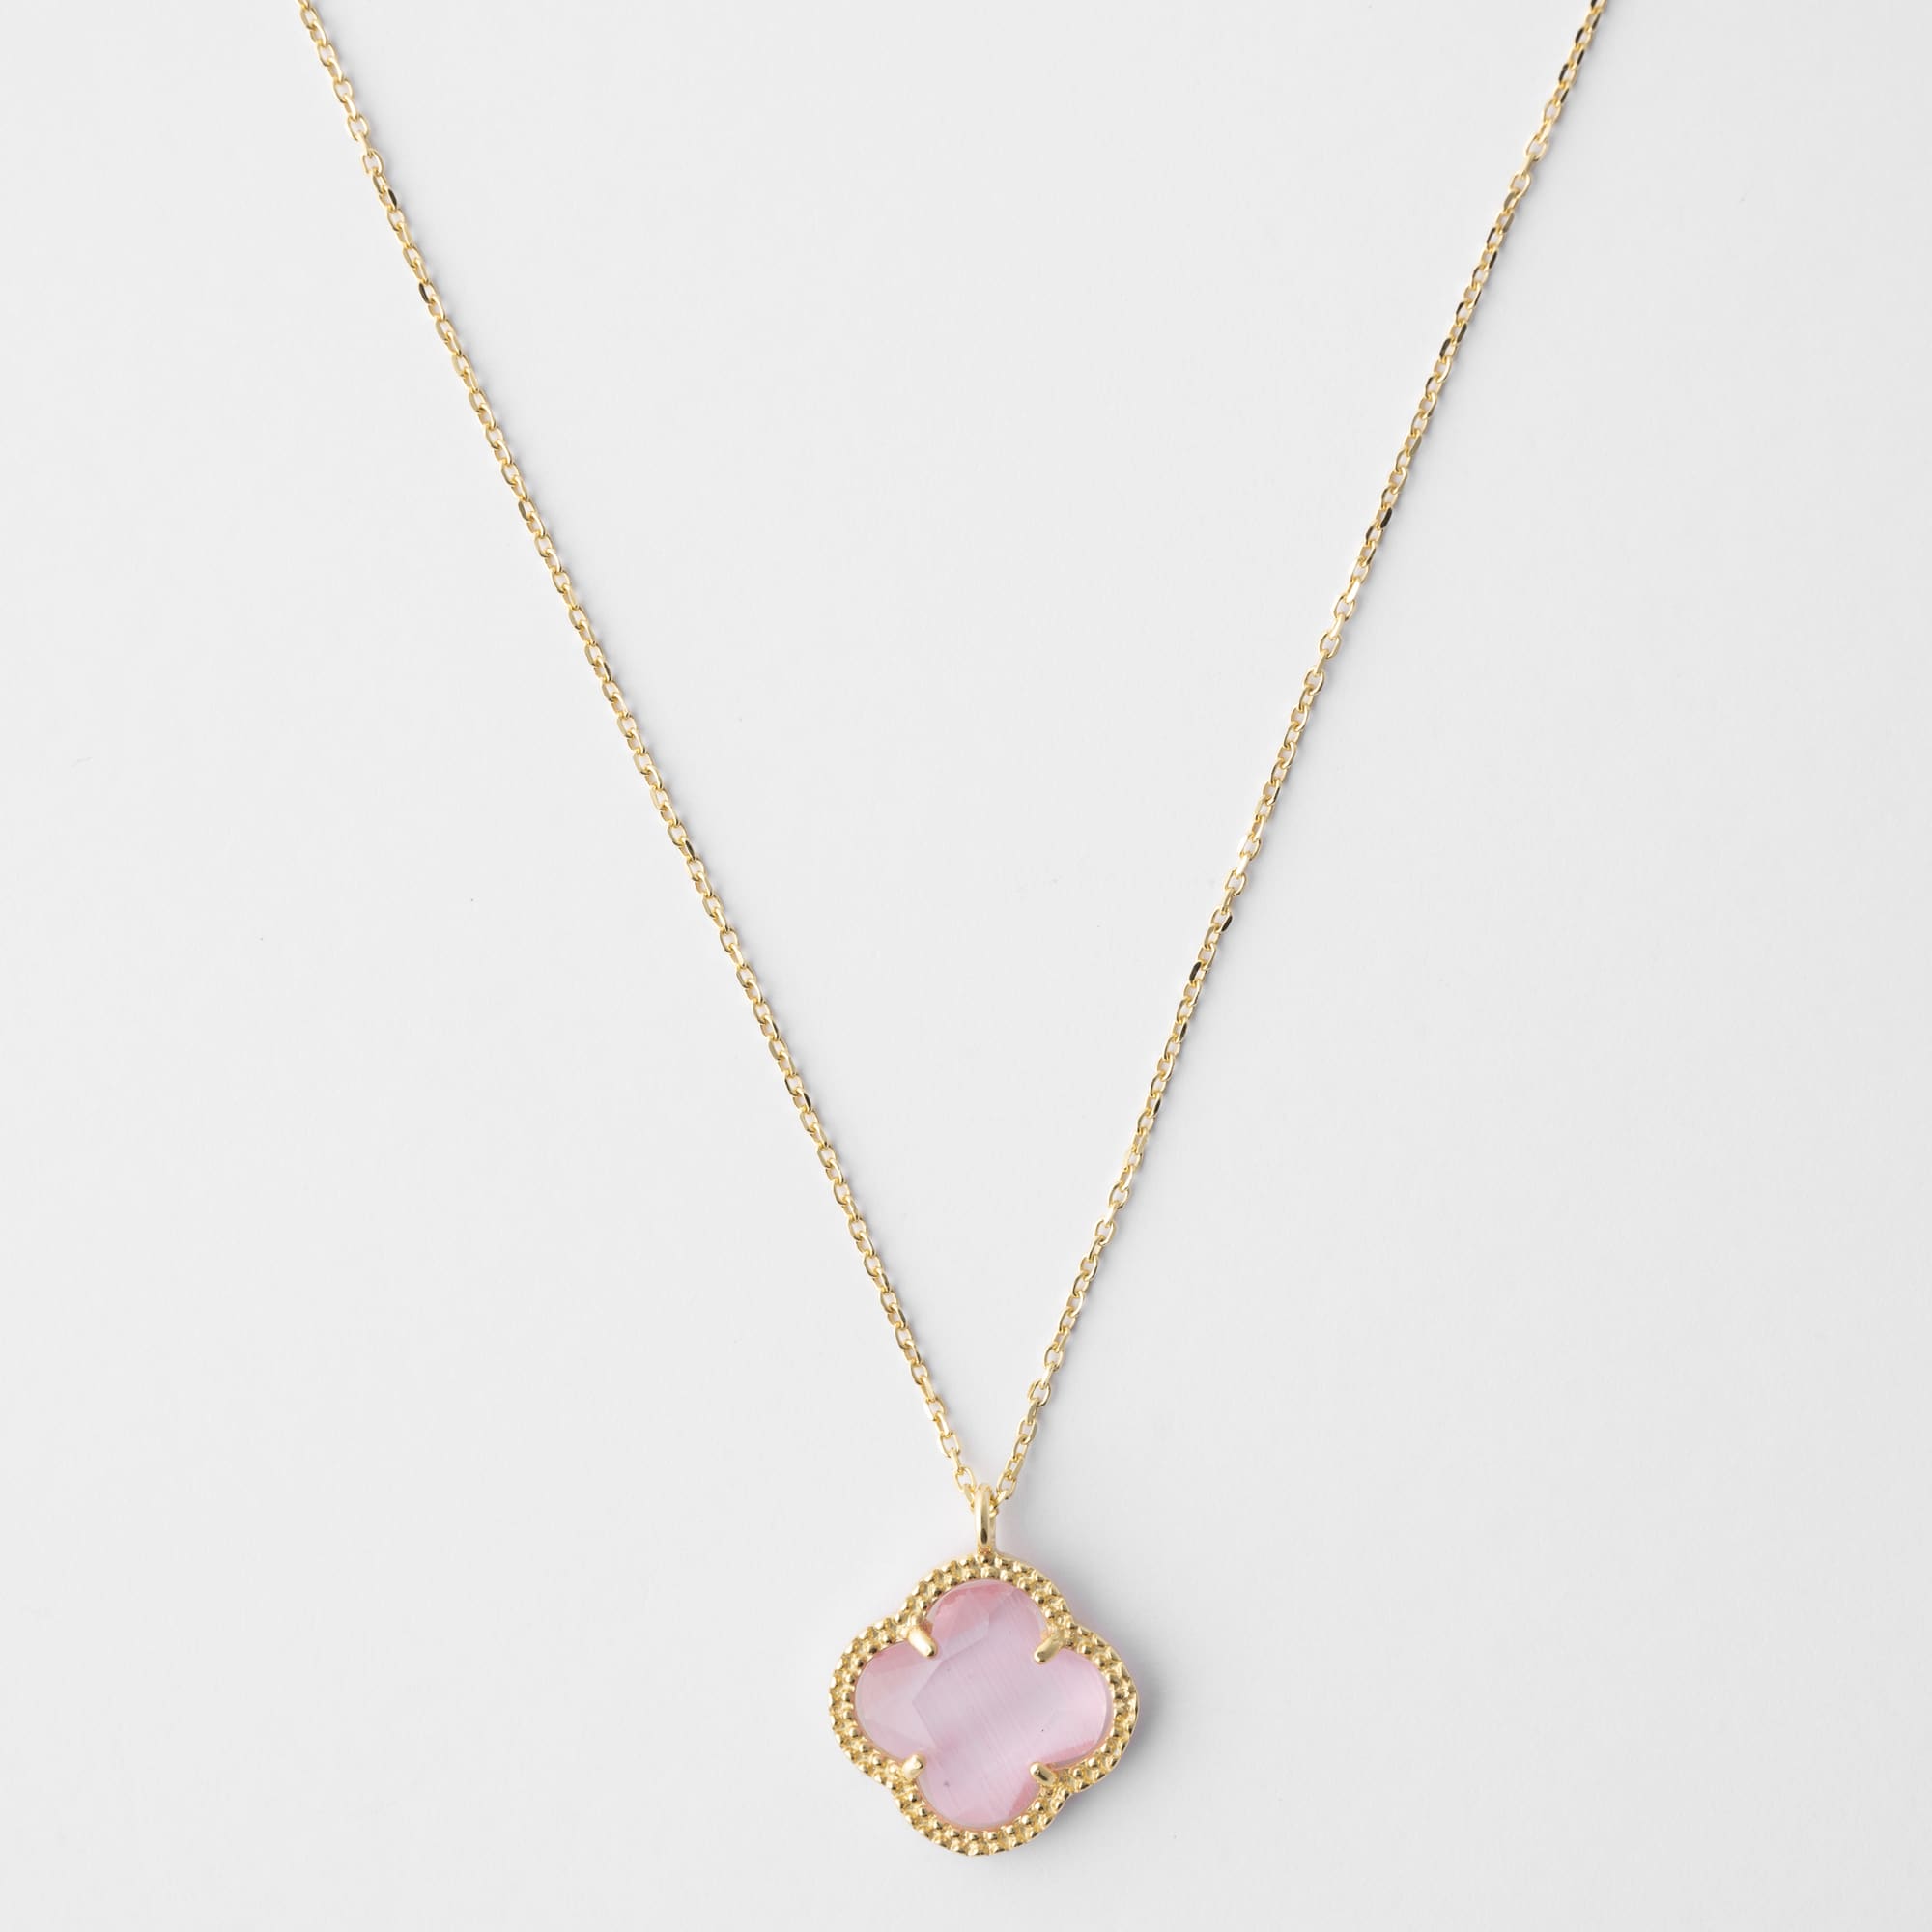 CLOVERLEAF Silver Necklace with Pink Quartz